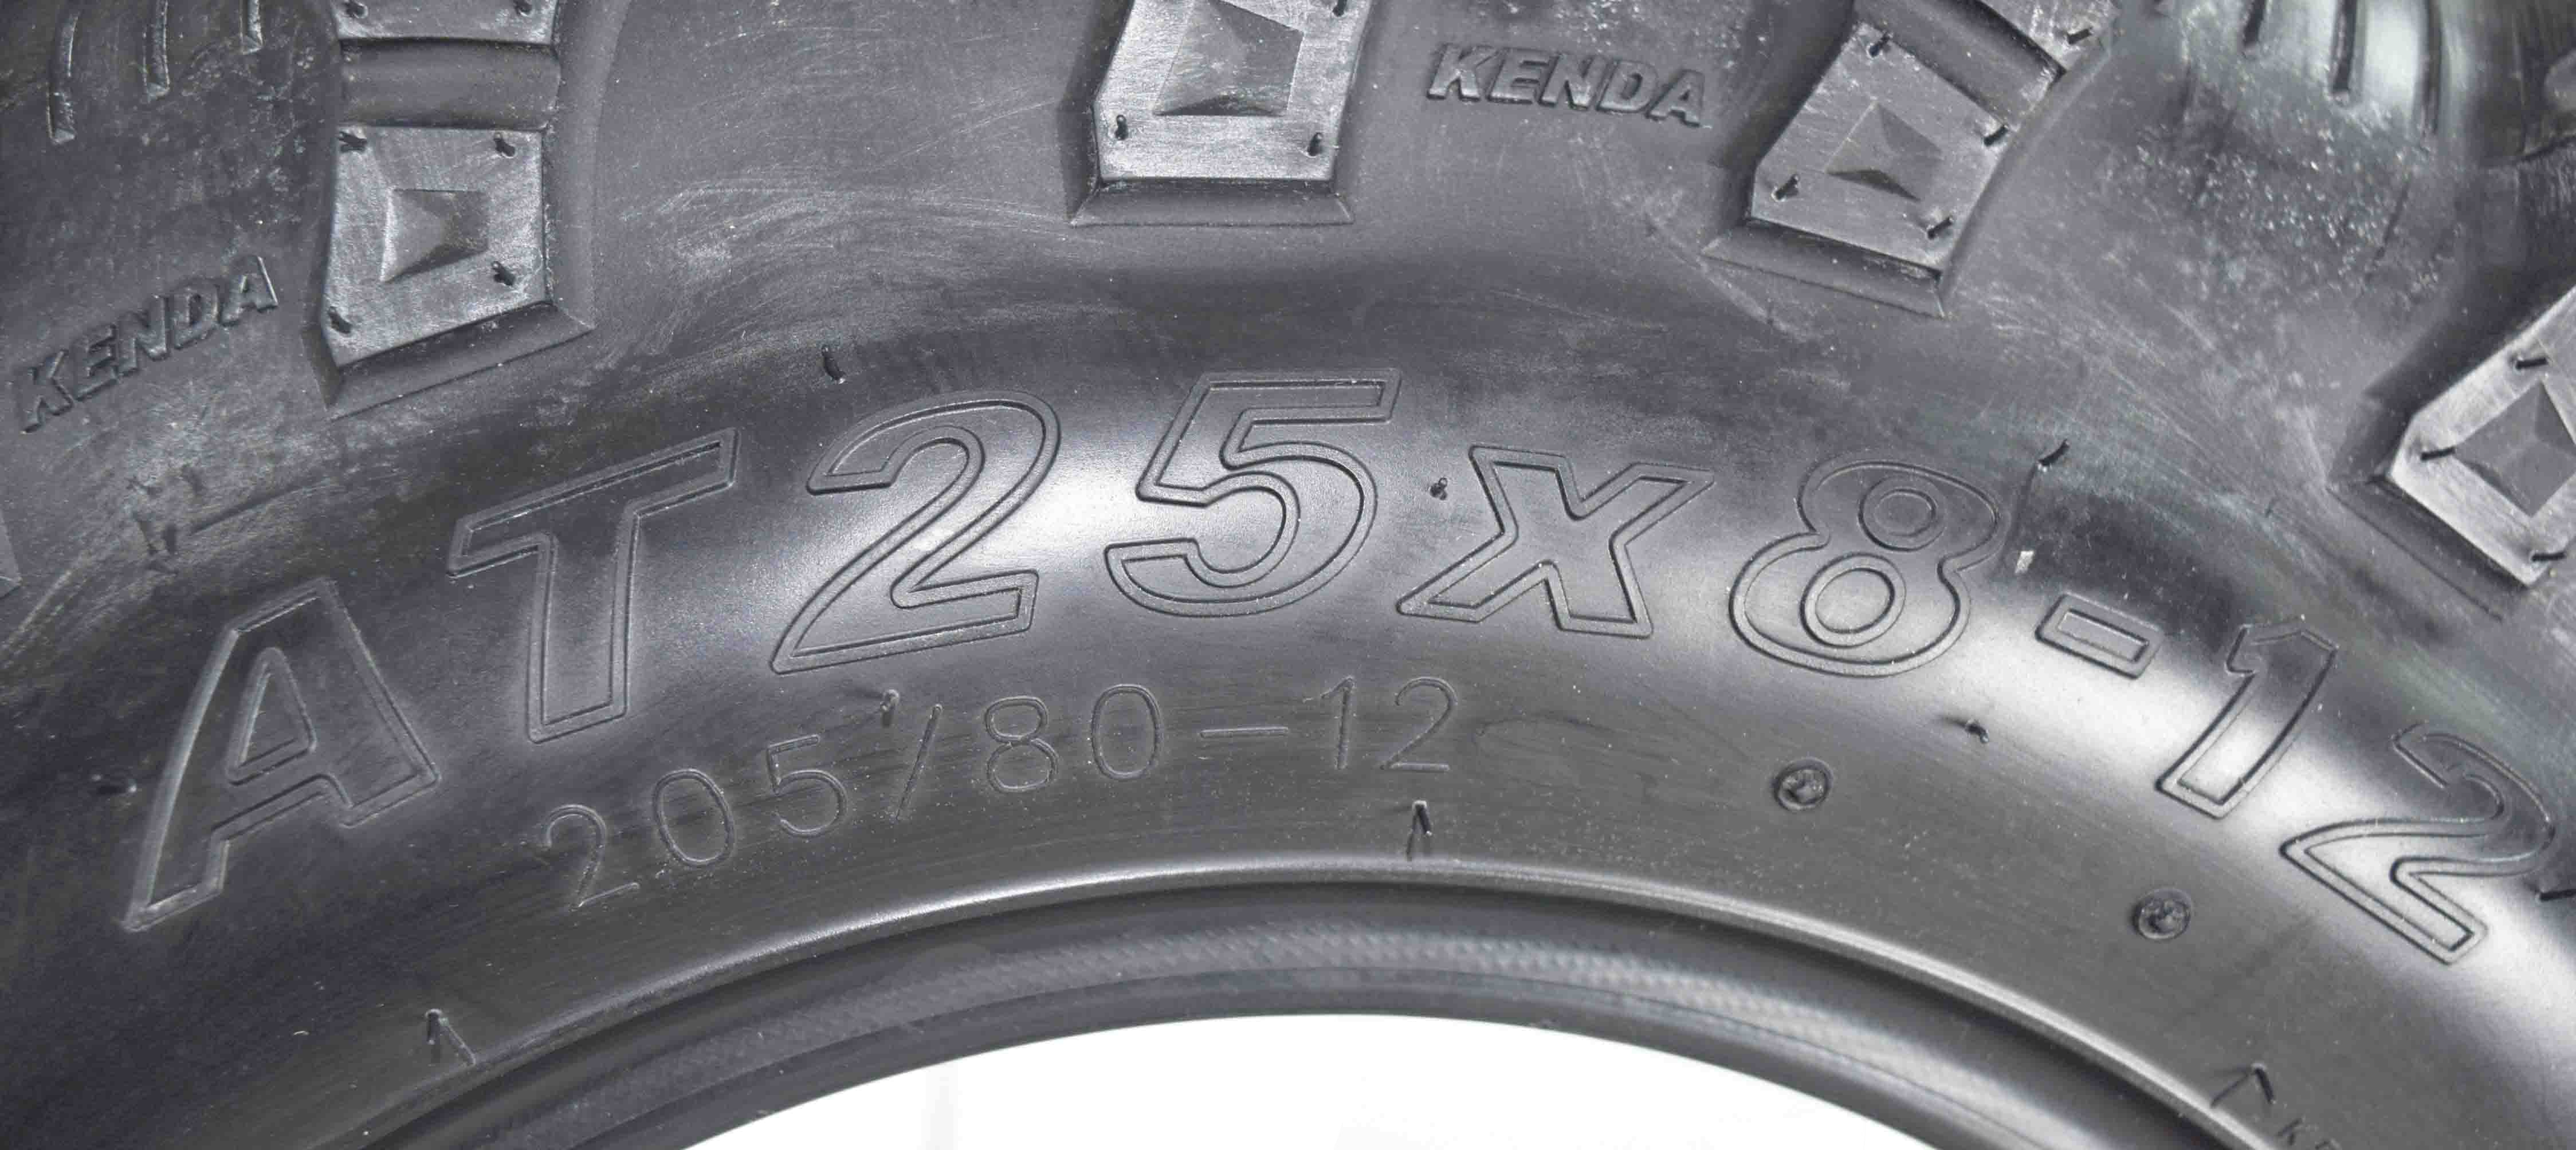 Kenda Bear Claw EVO 25x8-12 Front ATV/UTV Tire with Bottle Opener Keychain